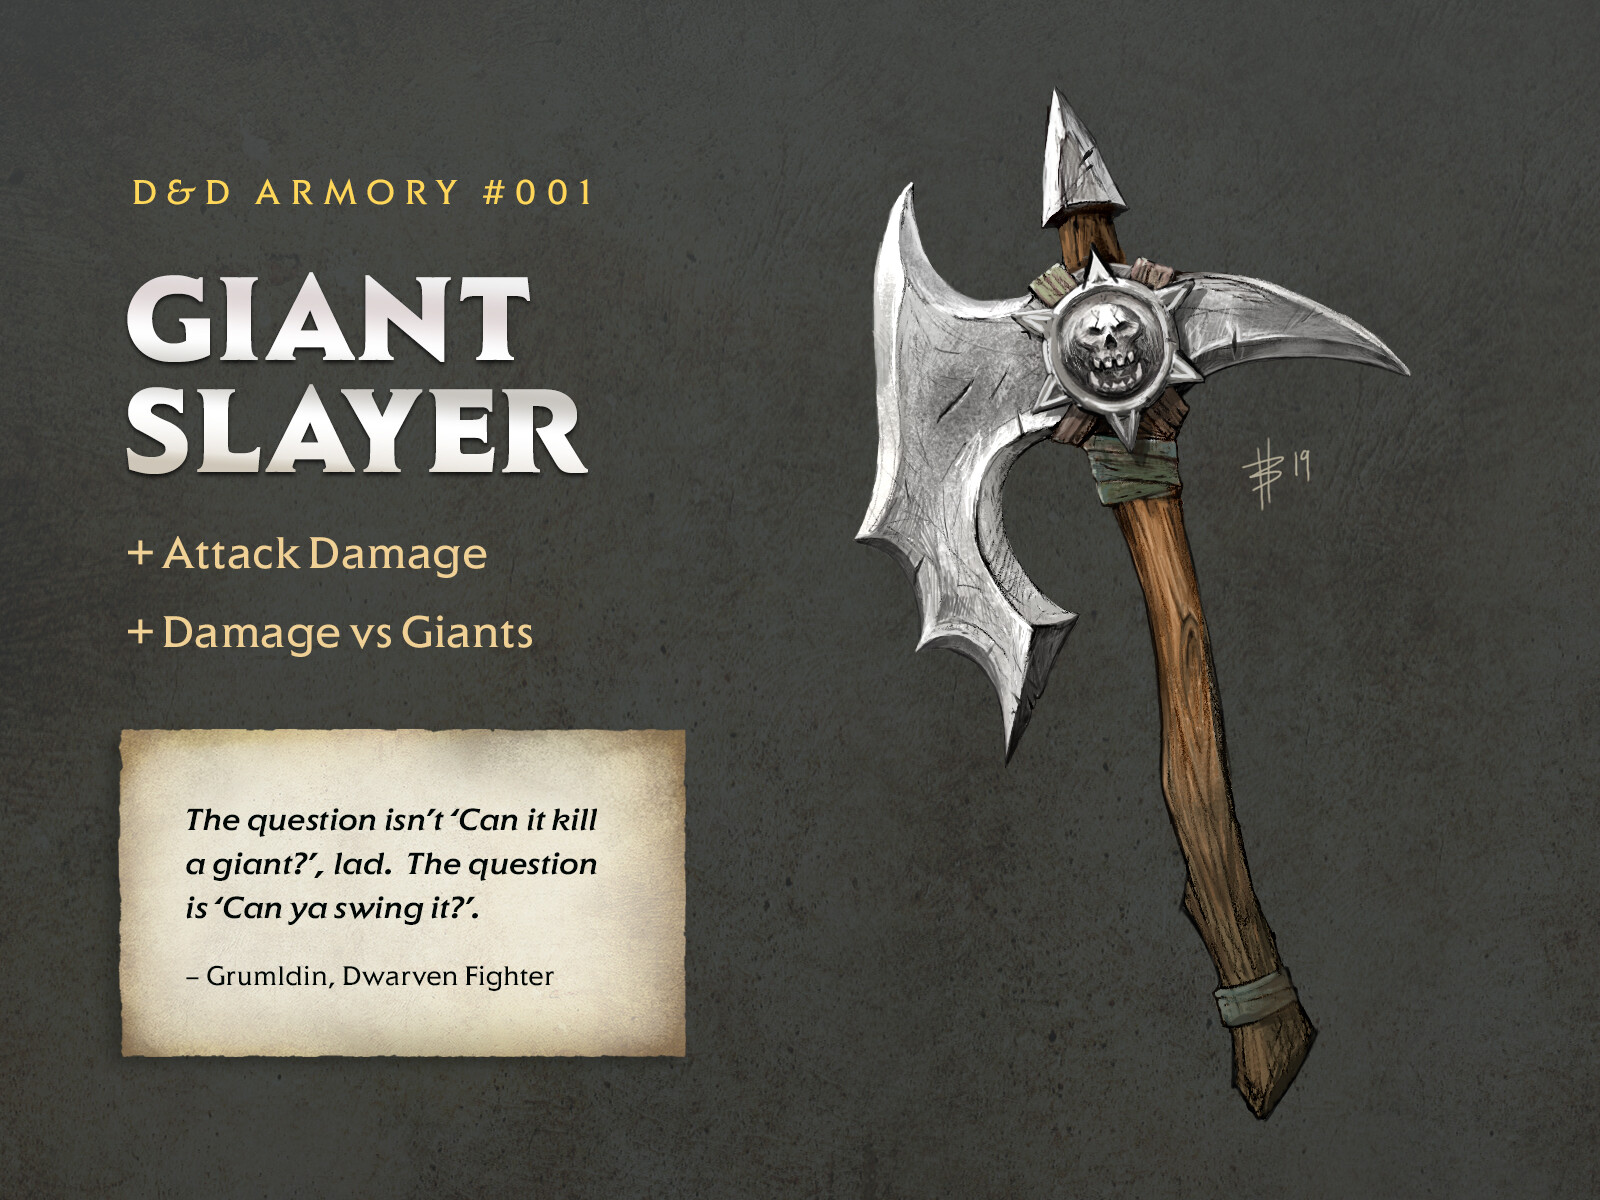 D&D Armory #001 - Giant Slayer.